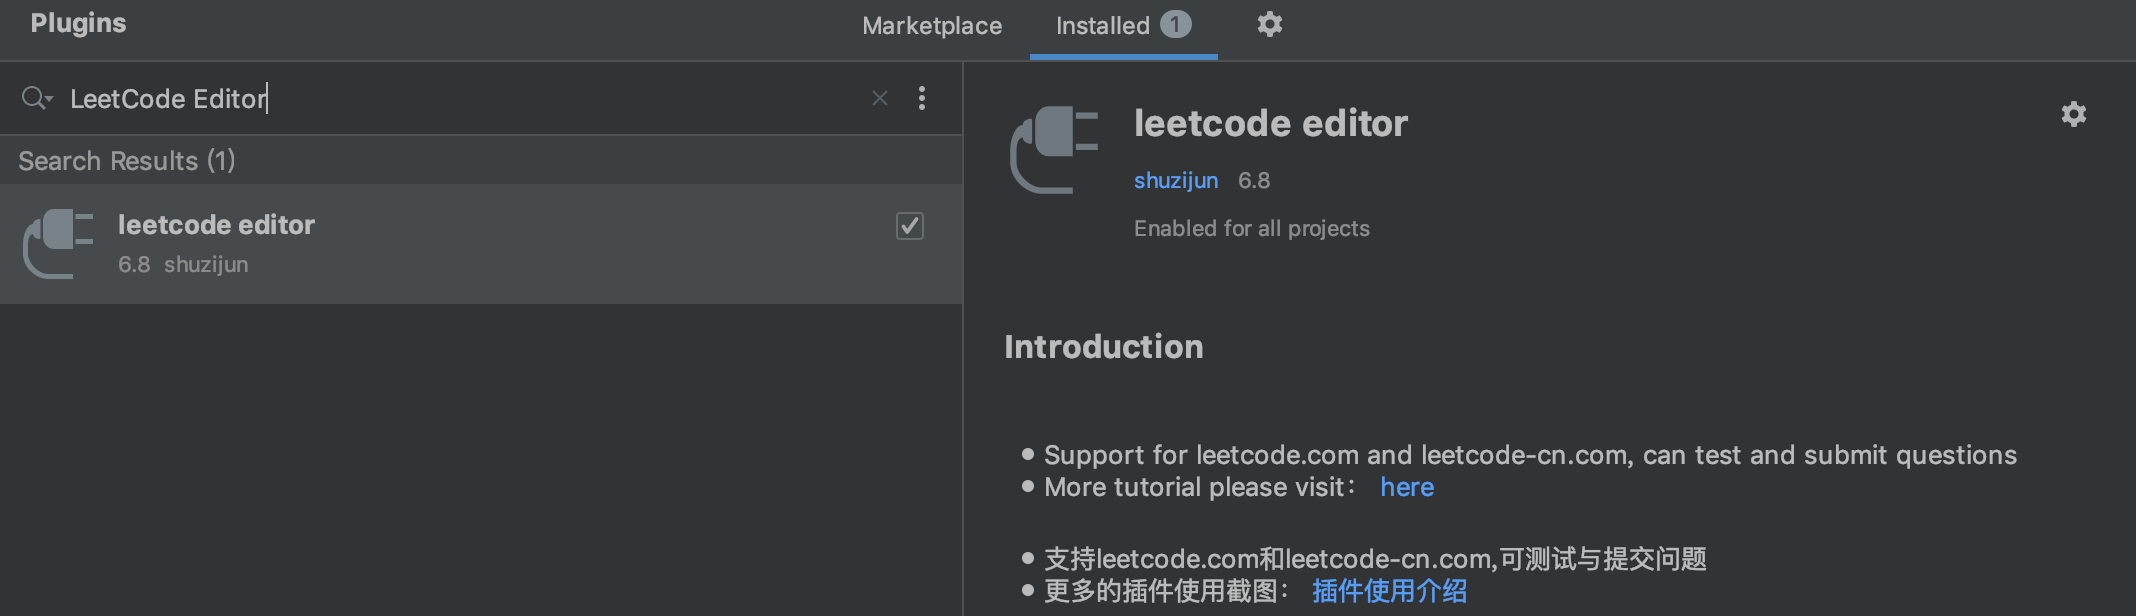 LeetCode Editor